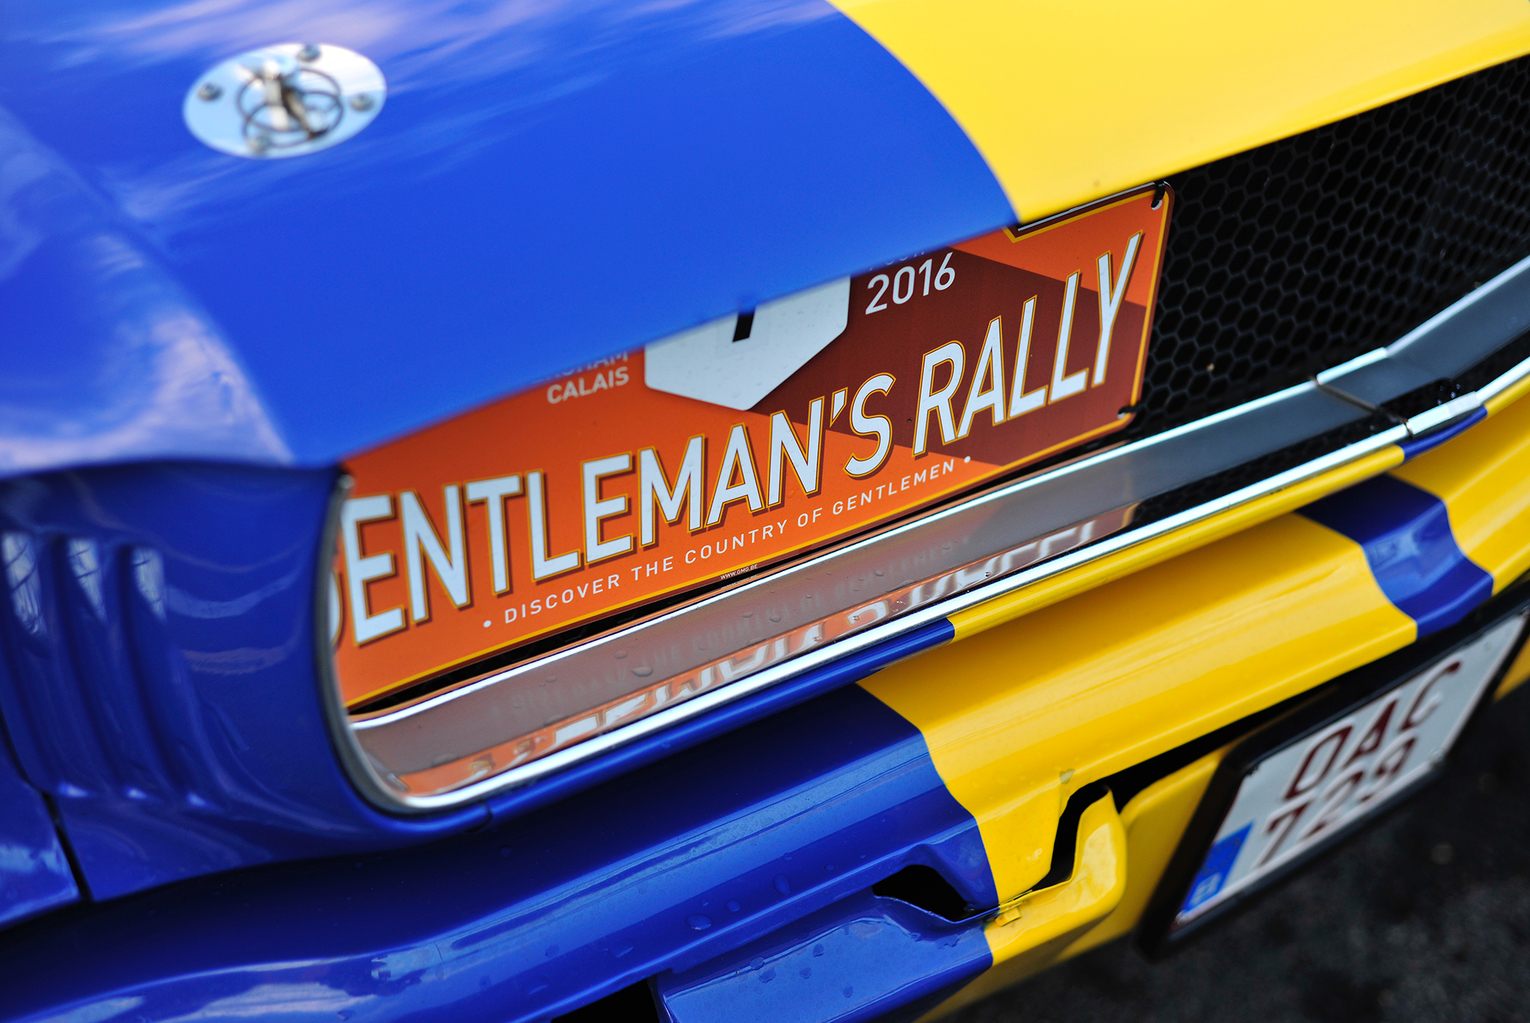 The Gentleman's Rally 1 / UK / 2016